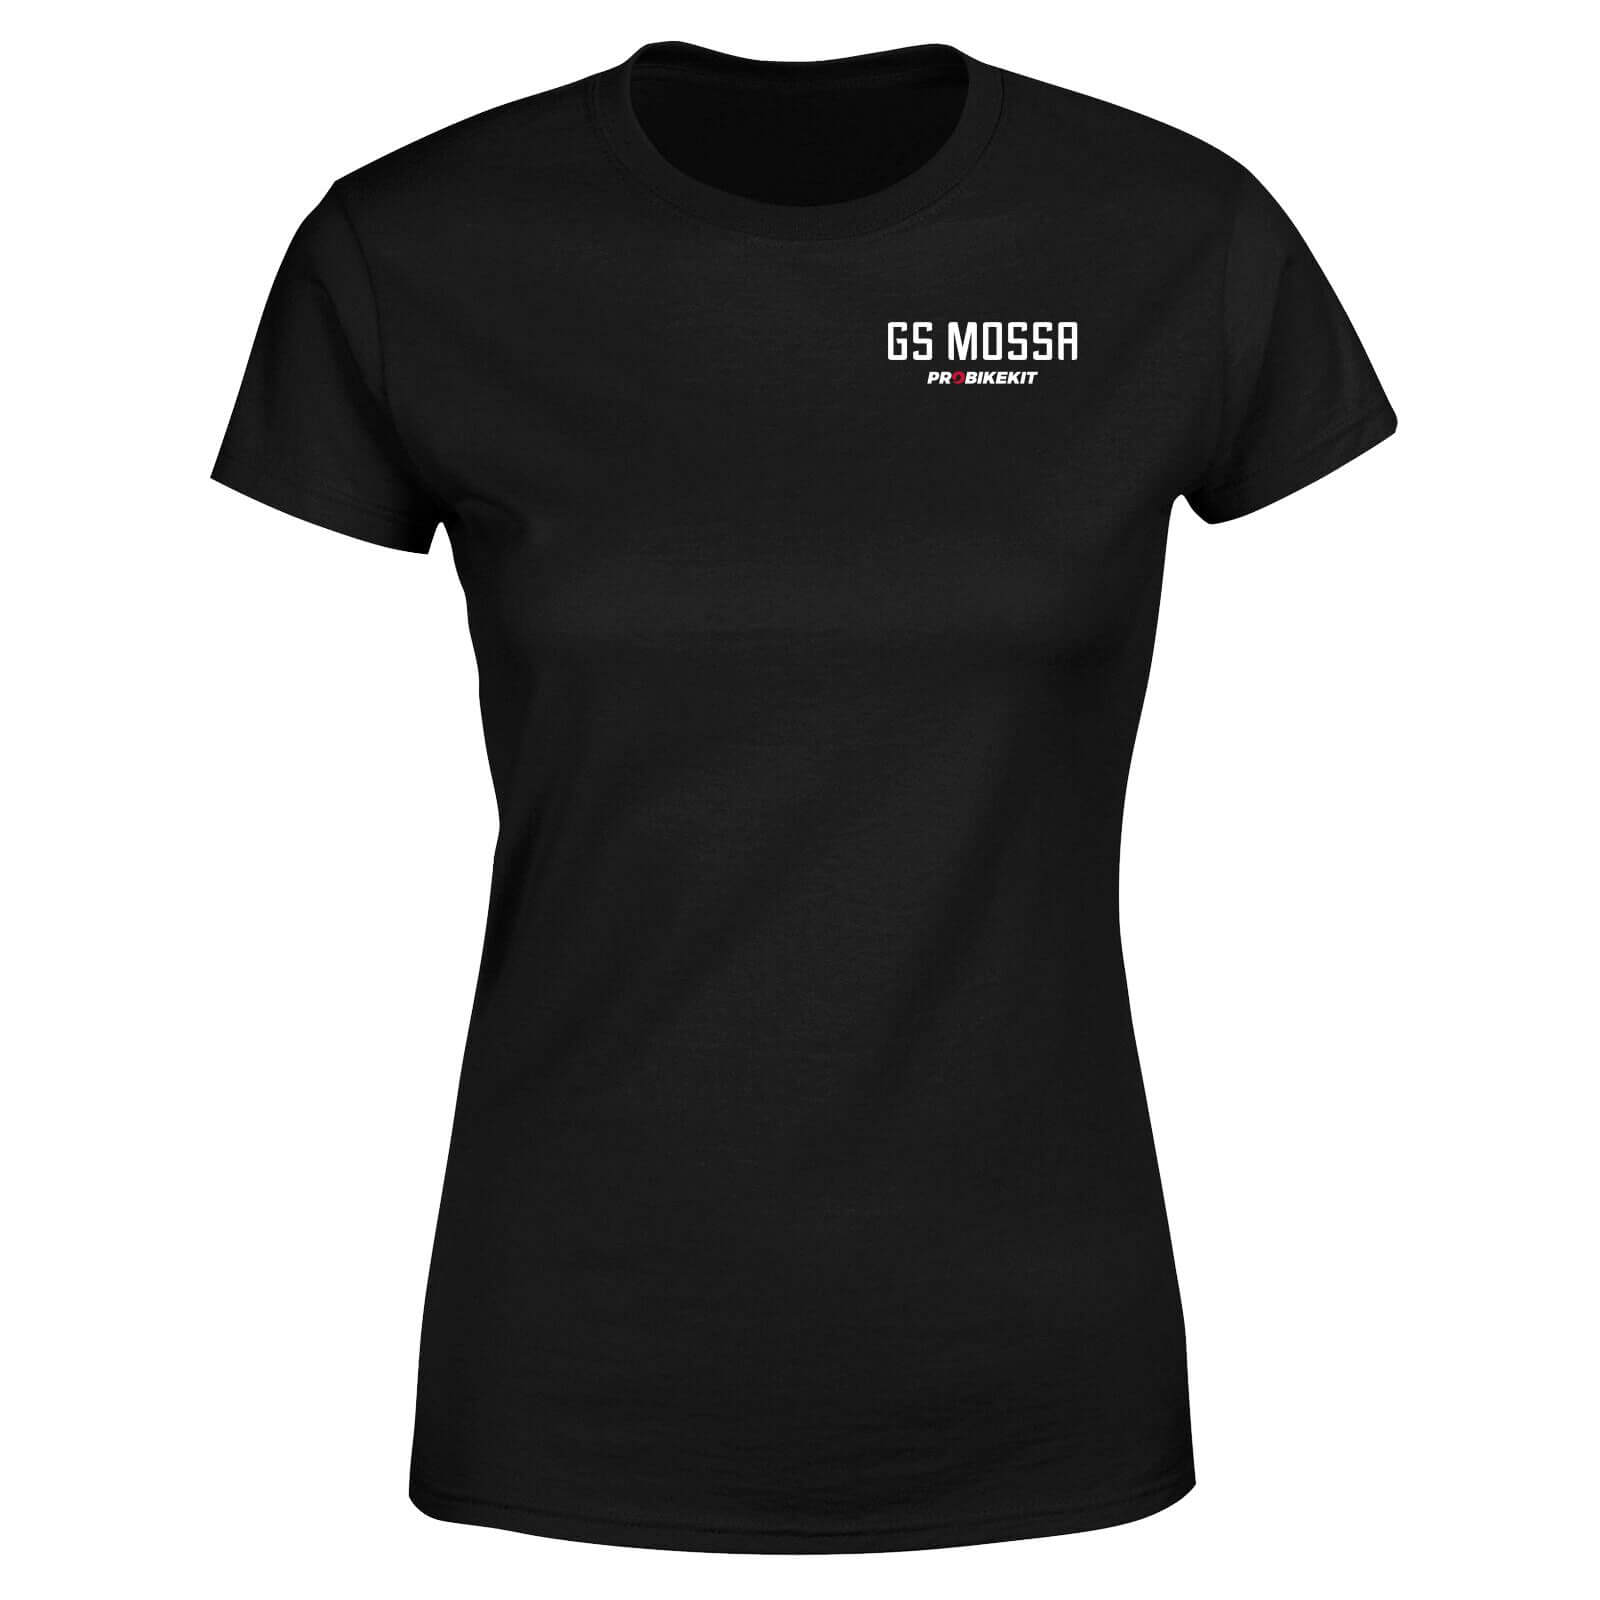 PBK GS Mossa Pocket Print Aqua Wave Women's T-Shirt - Black - S - Black